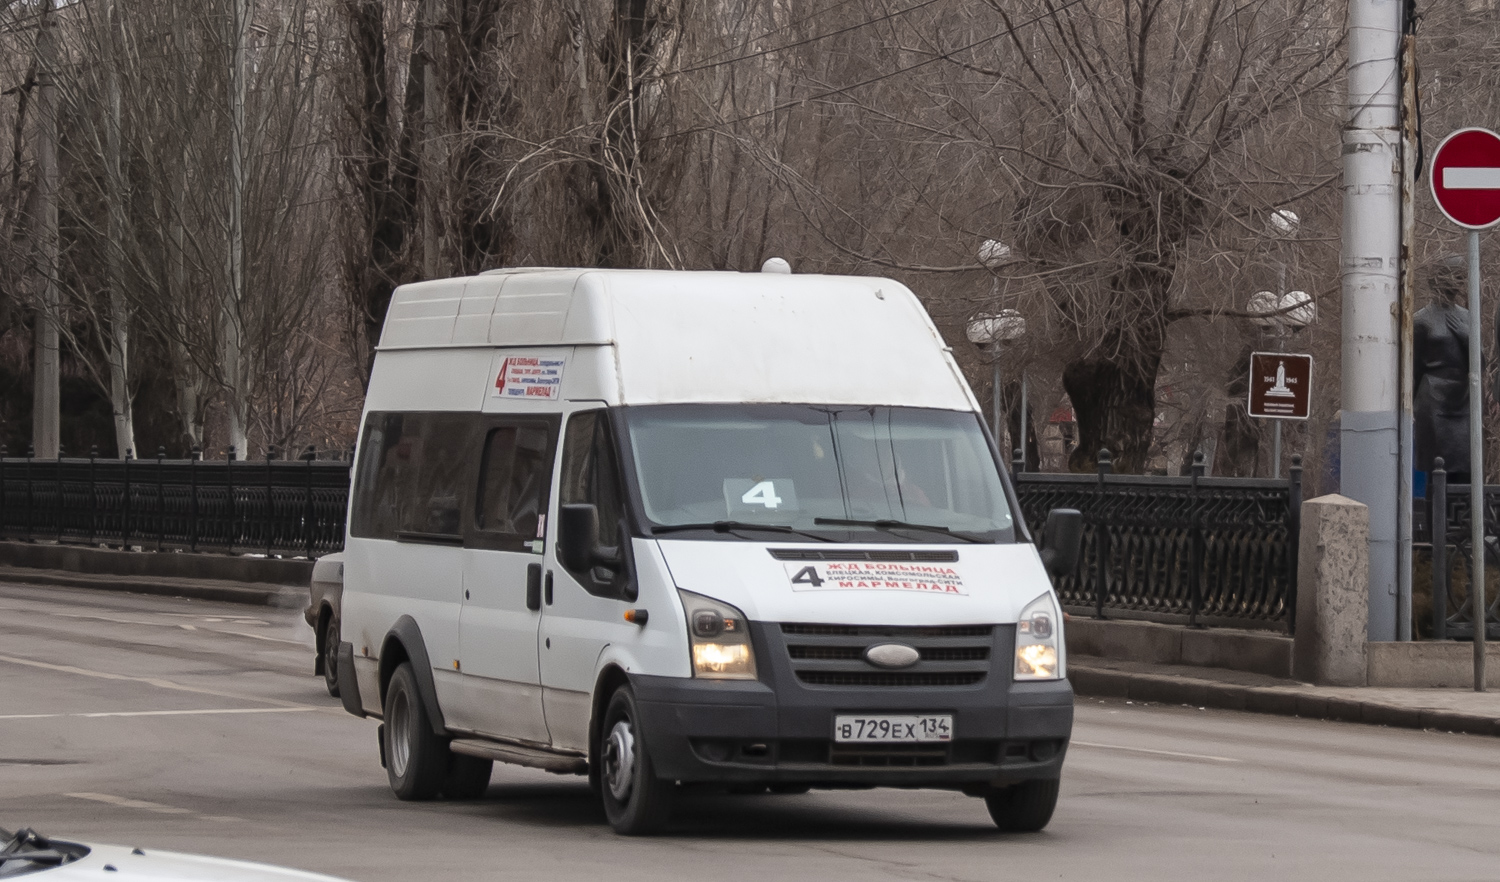 Volgograd region, GolAZ-3030 (Ford Transit) # В 729 ЕХ 134